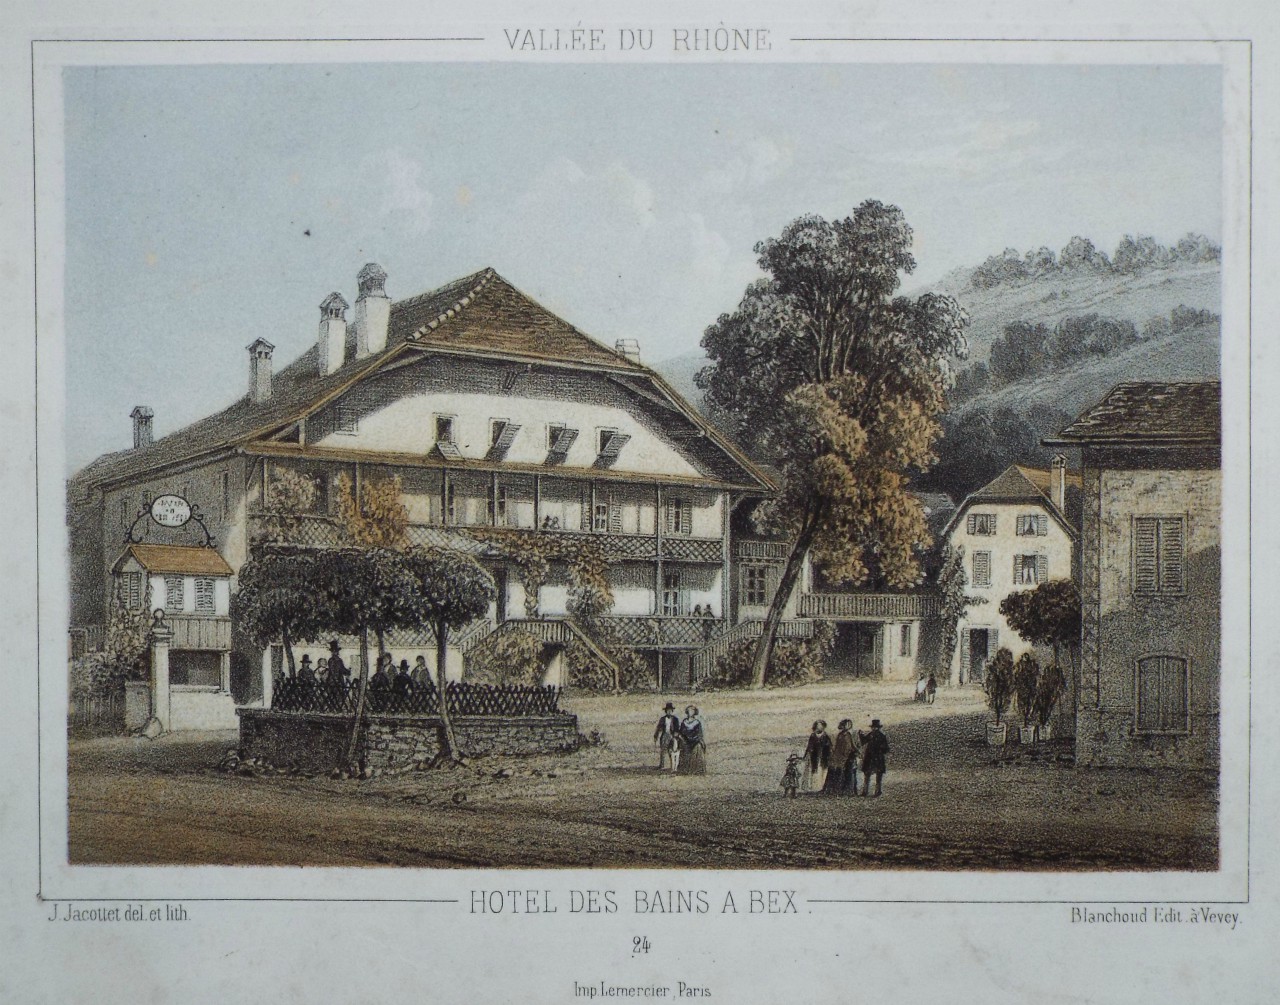 Lithograph - Vallee du Rhone Hotel des Bains a Bex. - 